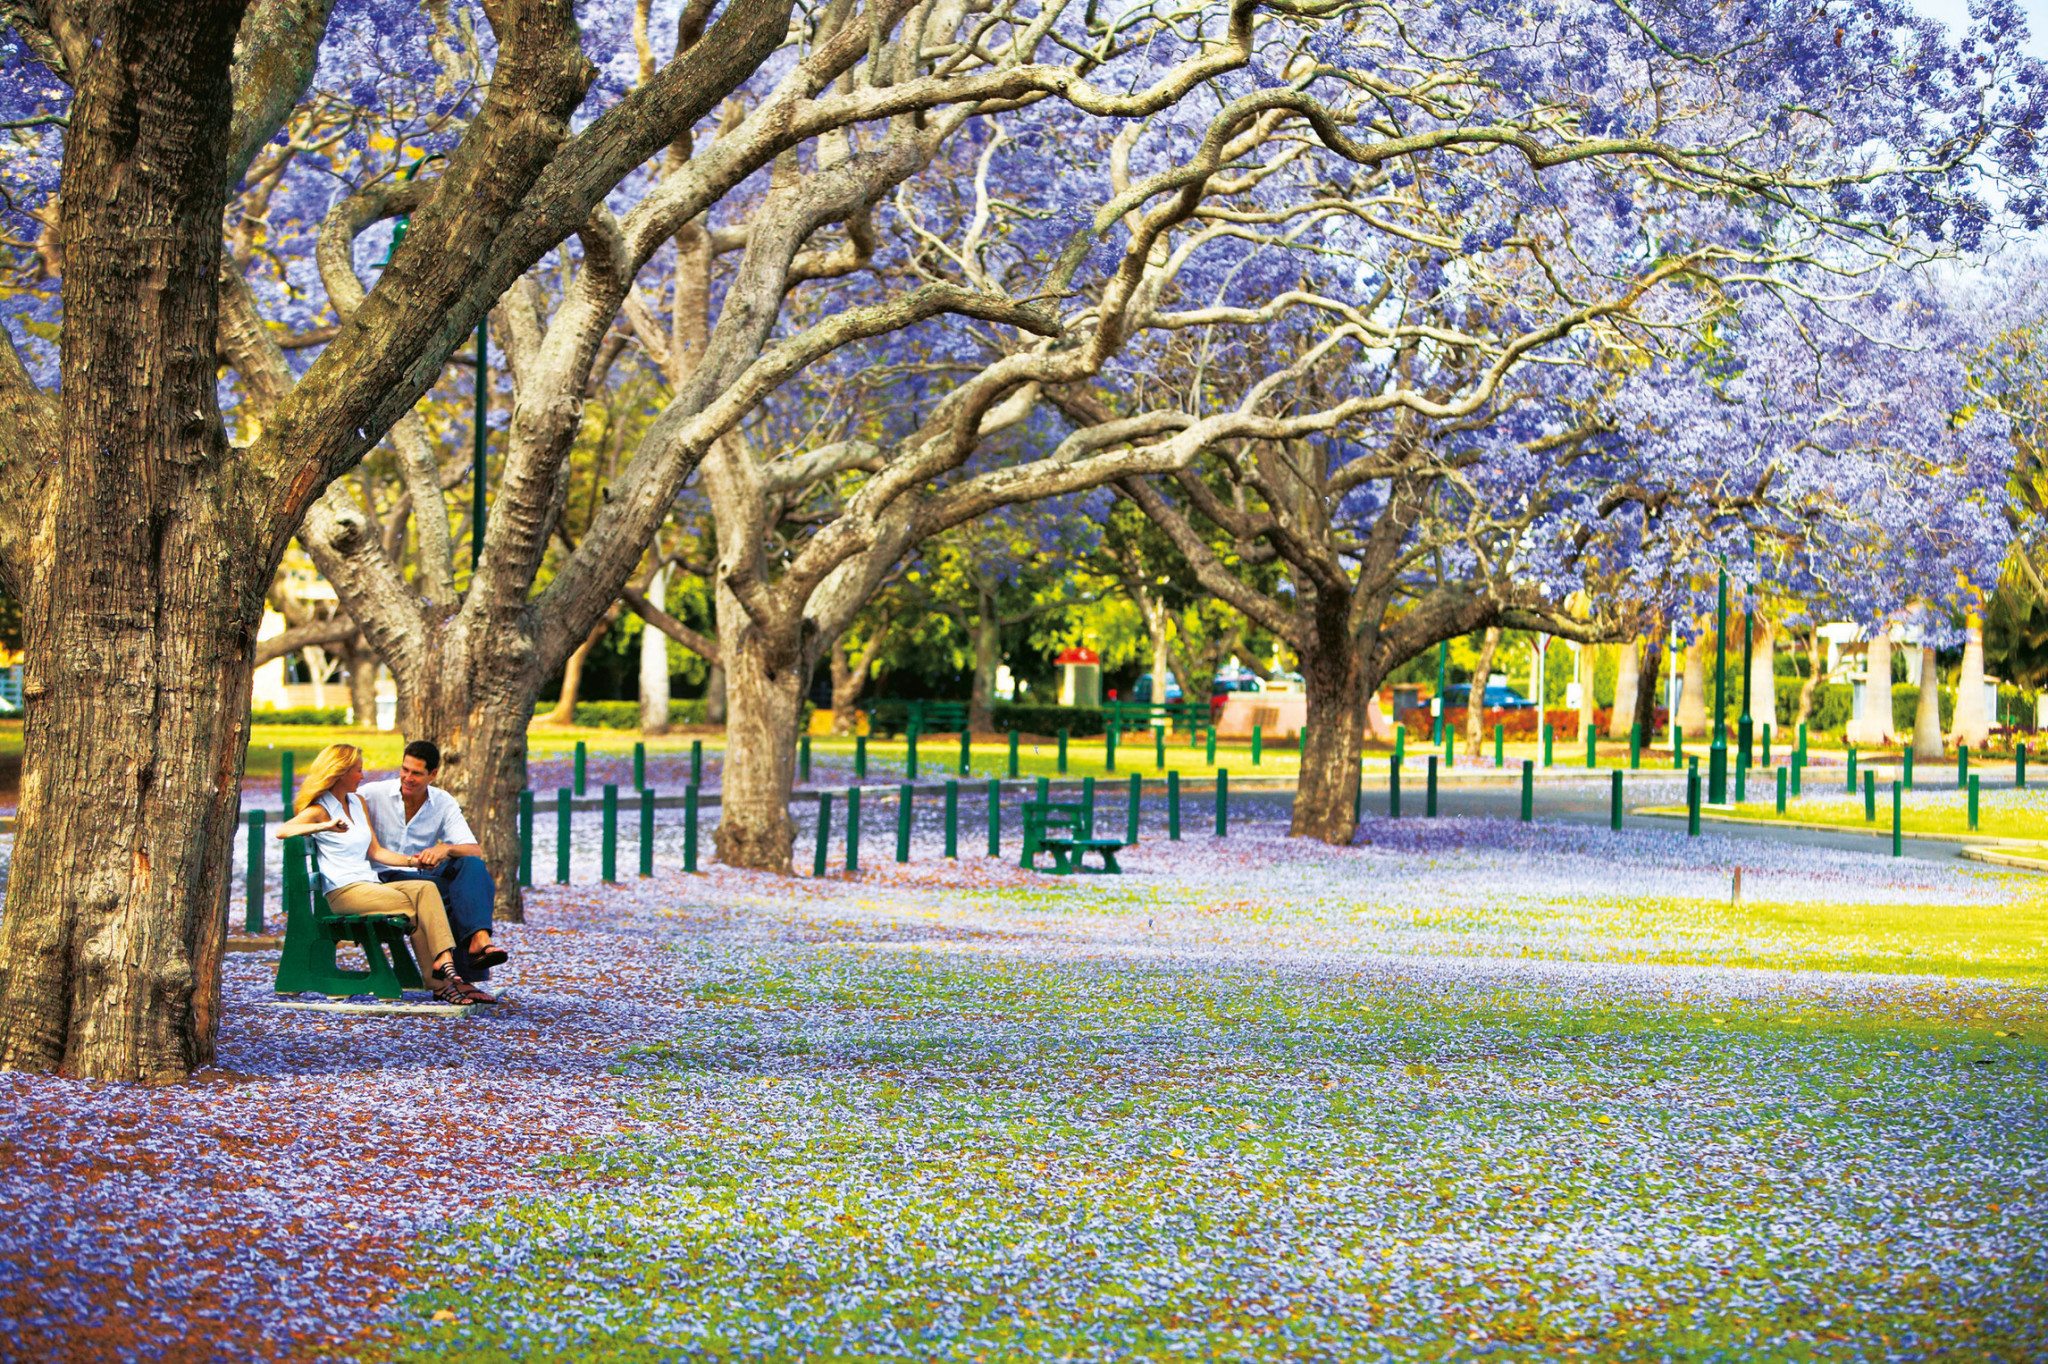 Brisbane's Jacaranda Trees in Spring